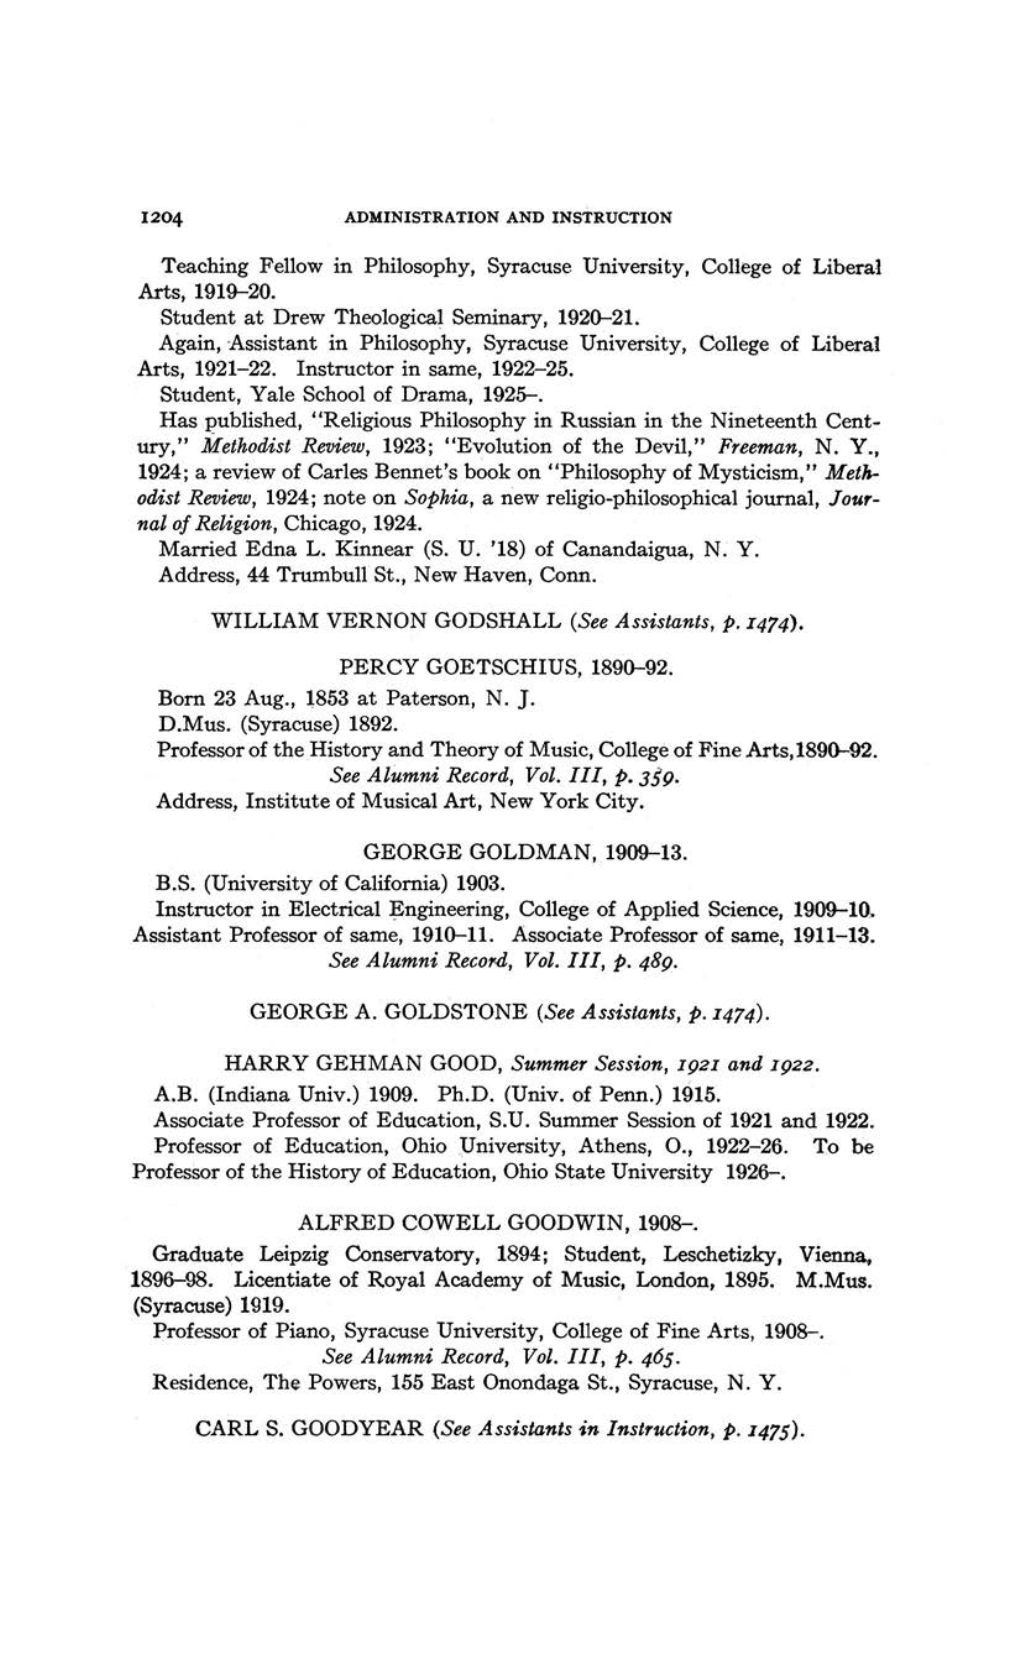 Nal of Religion, Chicago, 1924. See Alumni Record, Vol. III, P